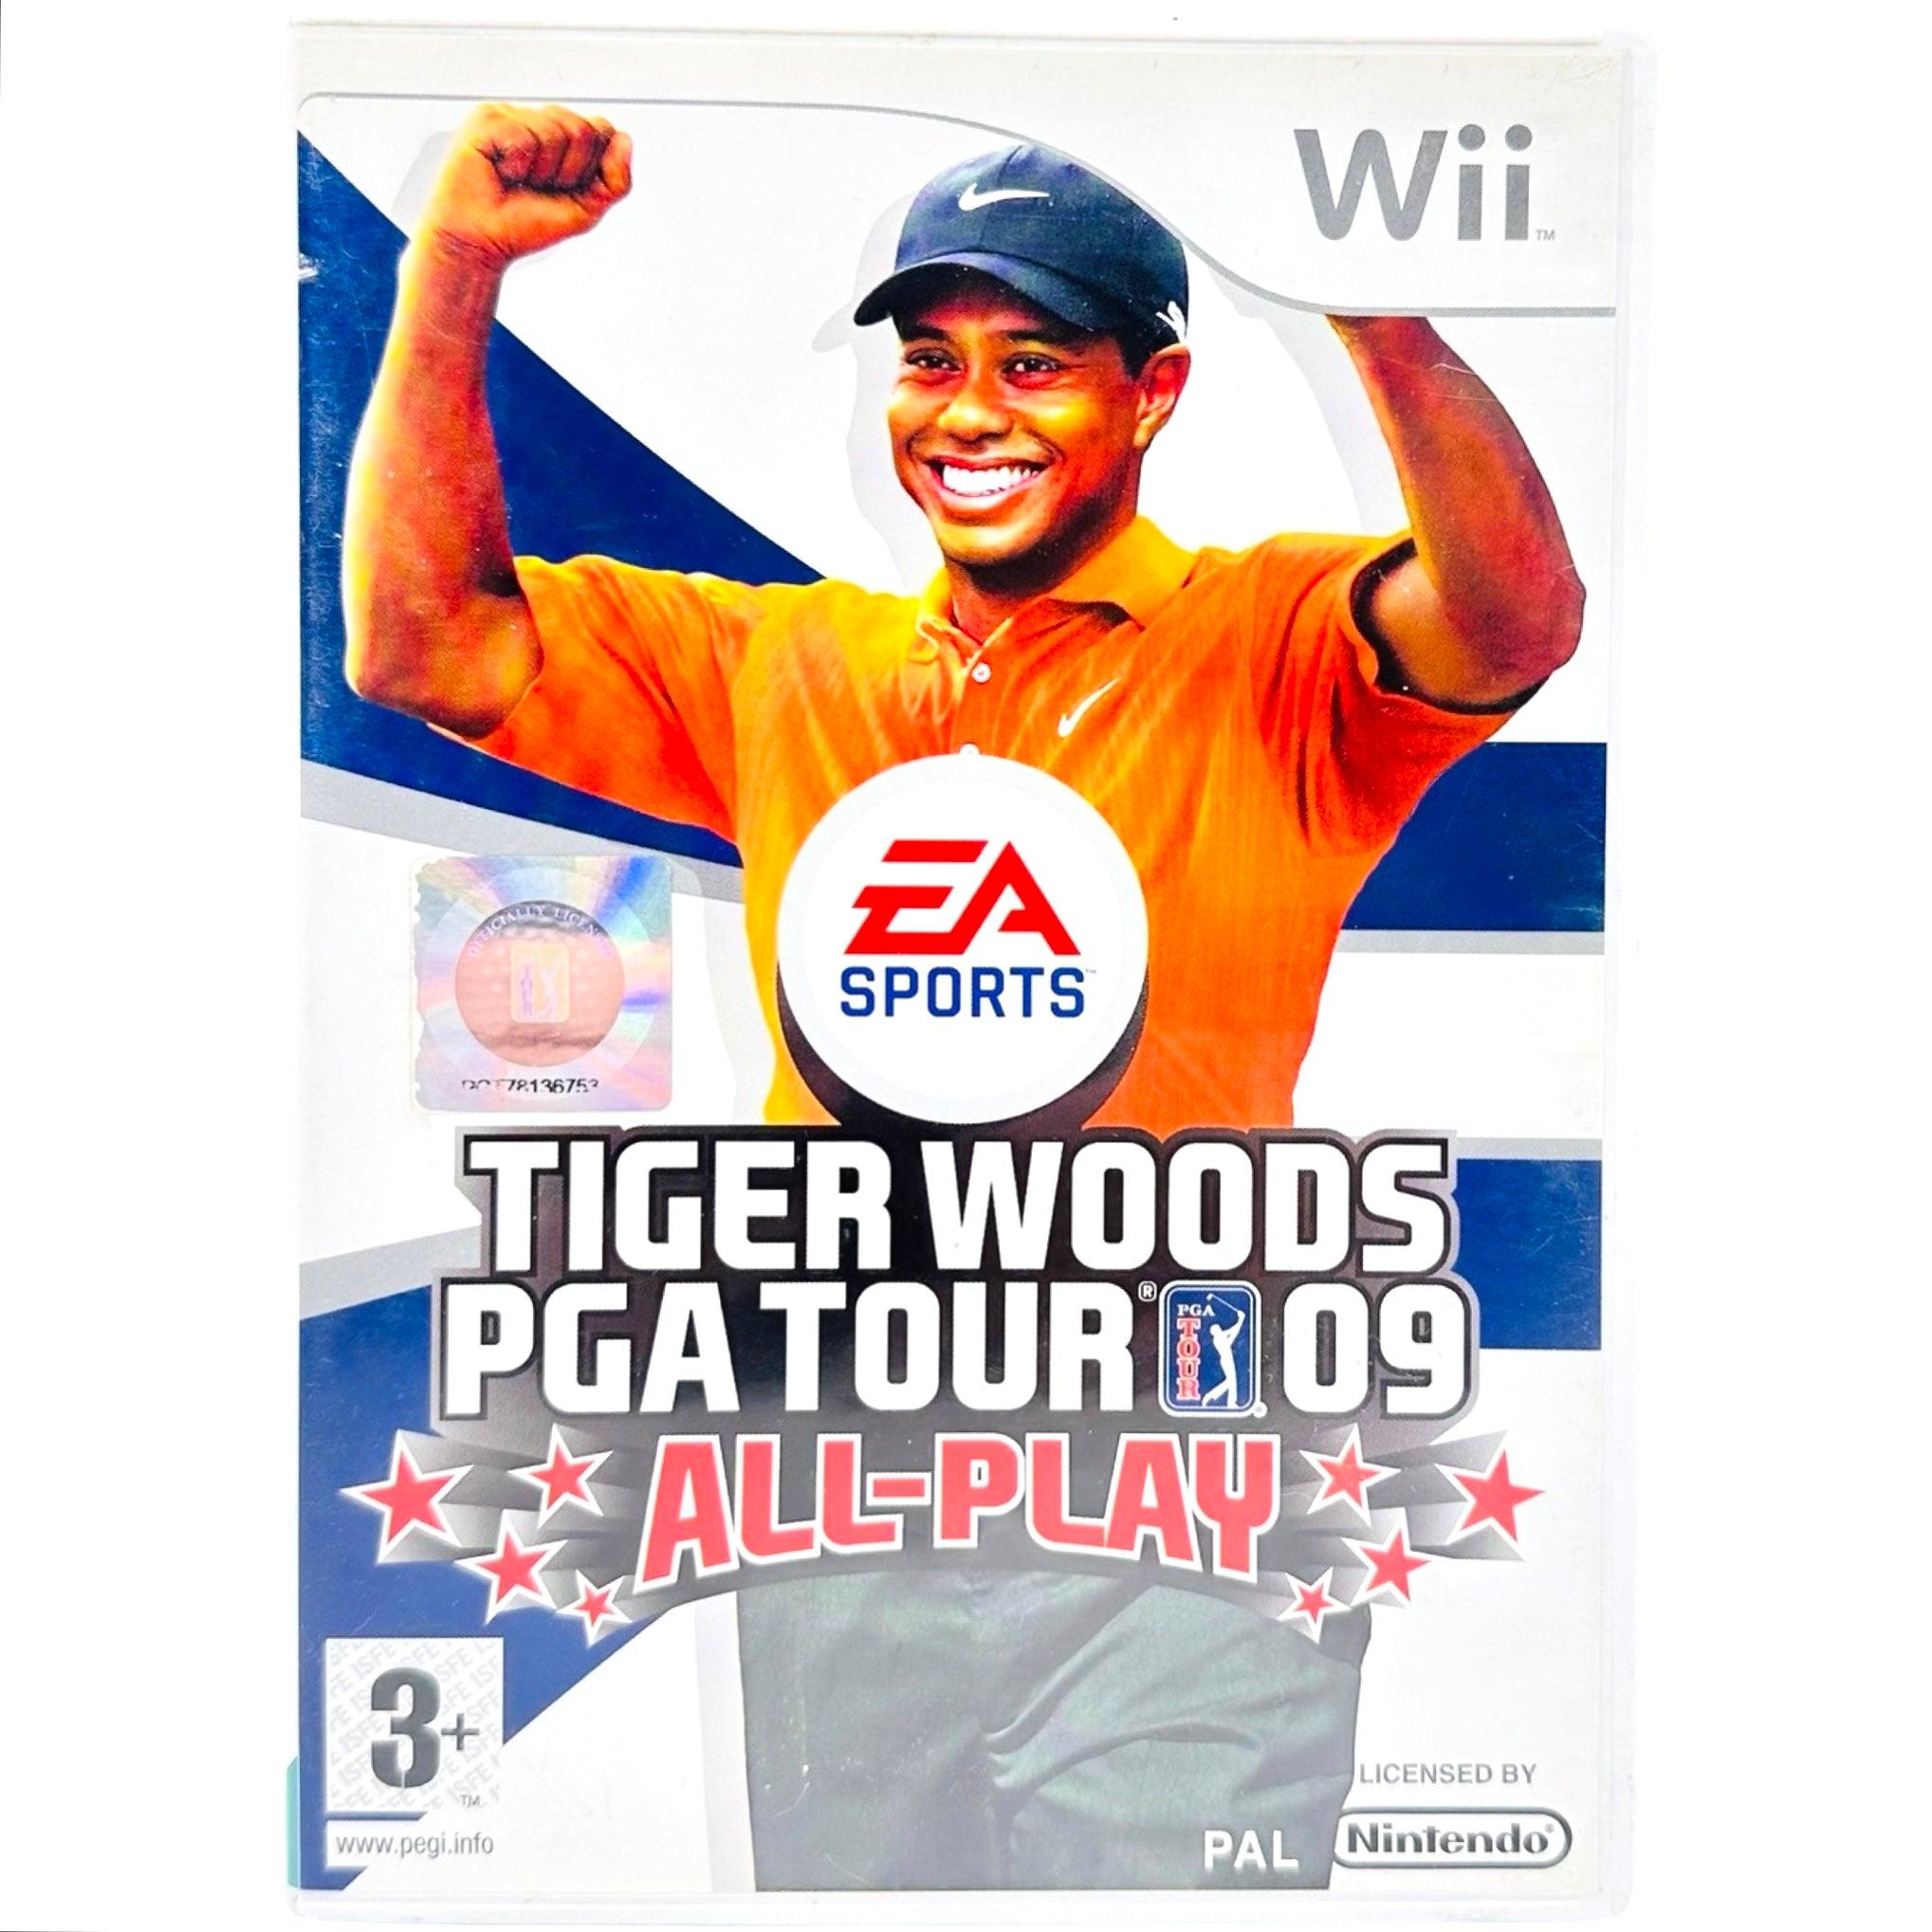 Wii: Tiger Woods PGA Tour 09 All-Play - RetroGaming.no